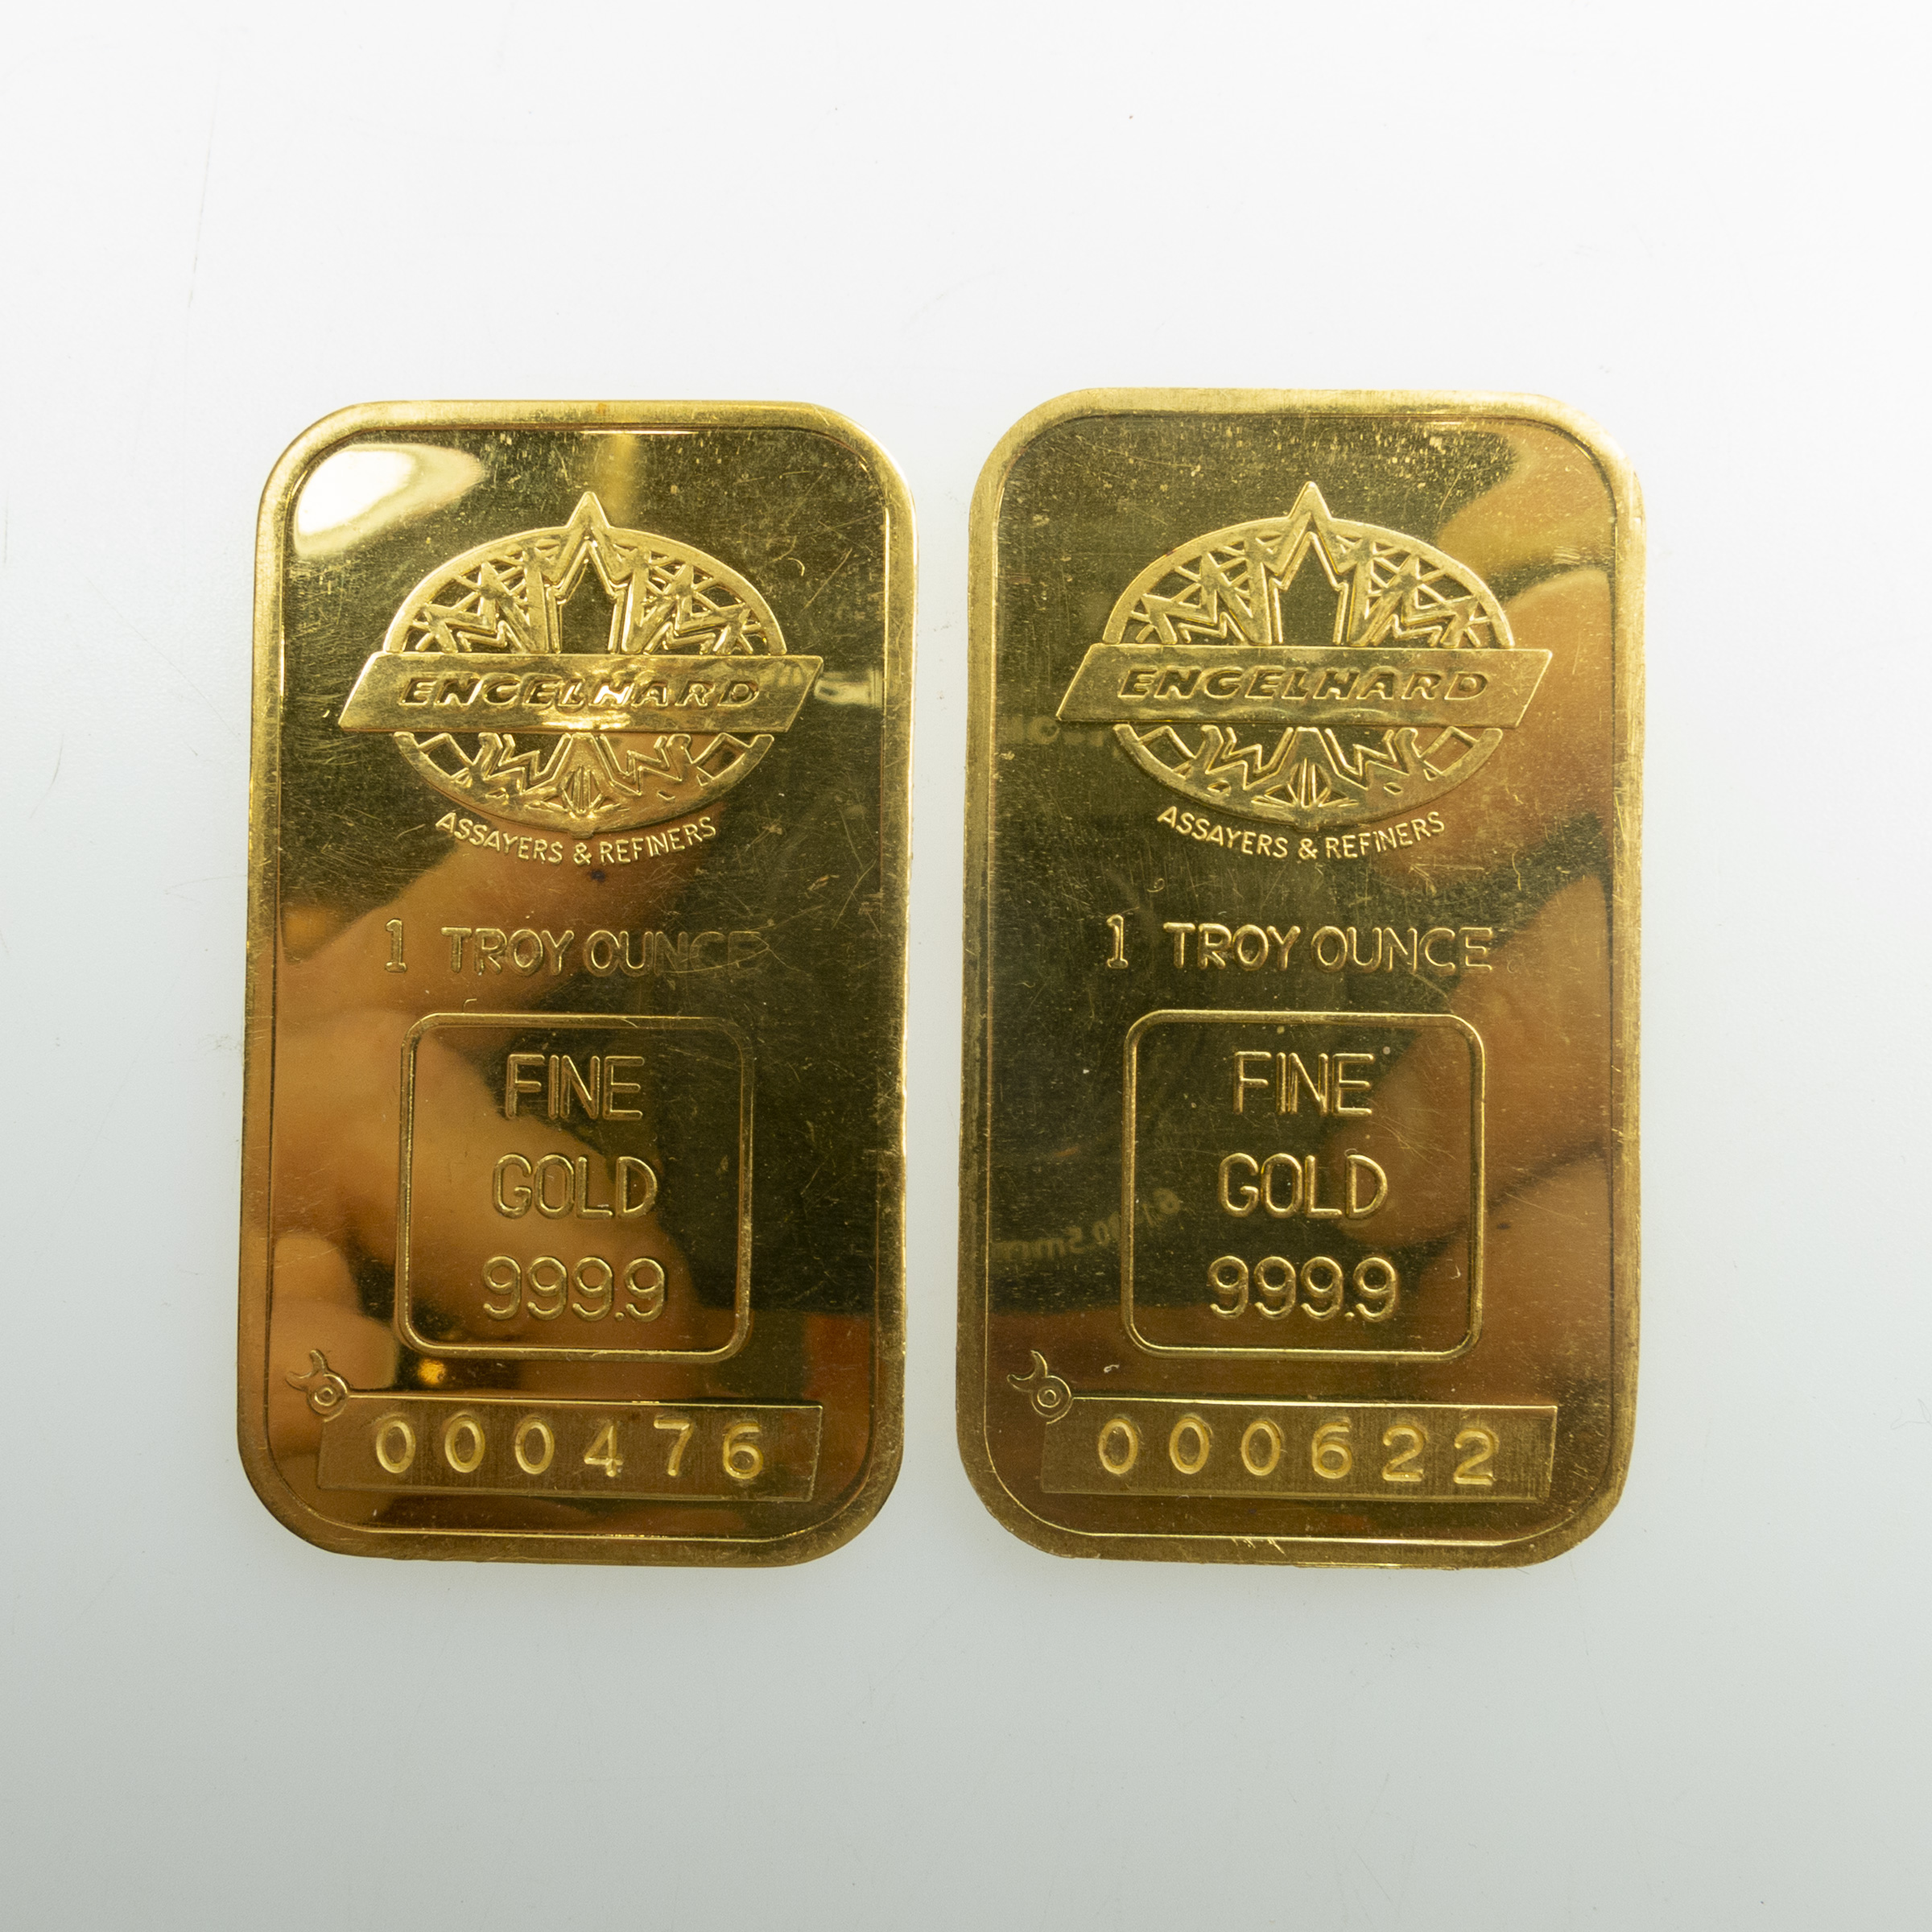 Two Engelhard One Ounce Gold Ingot #000476 & 000622